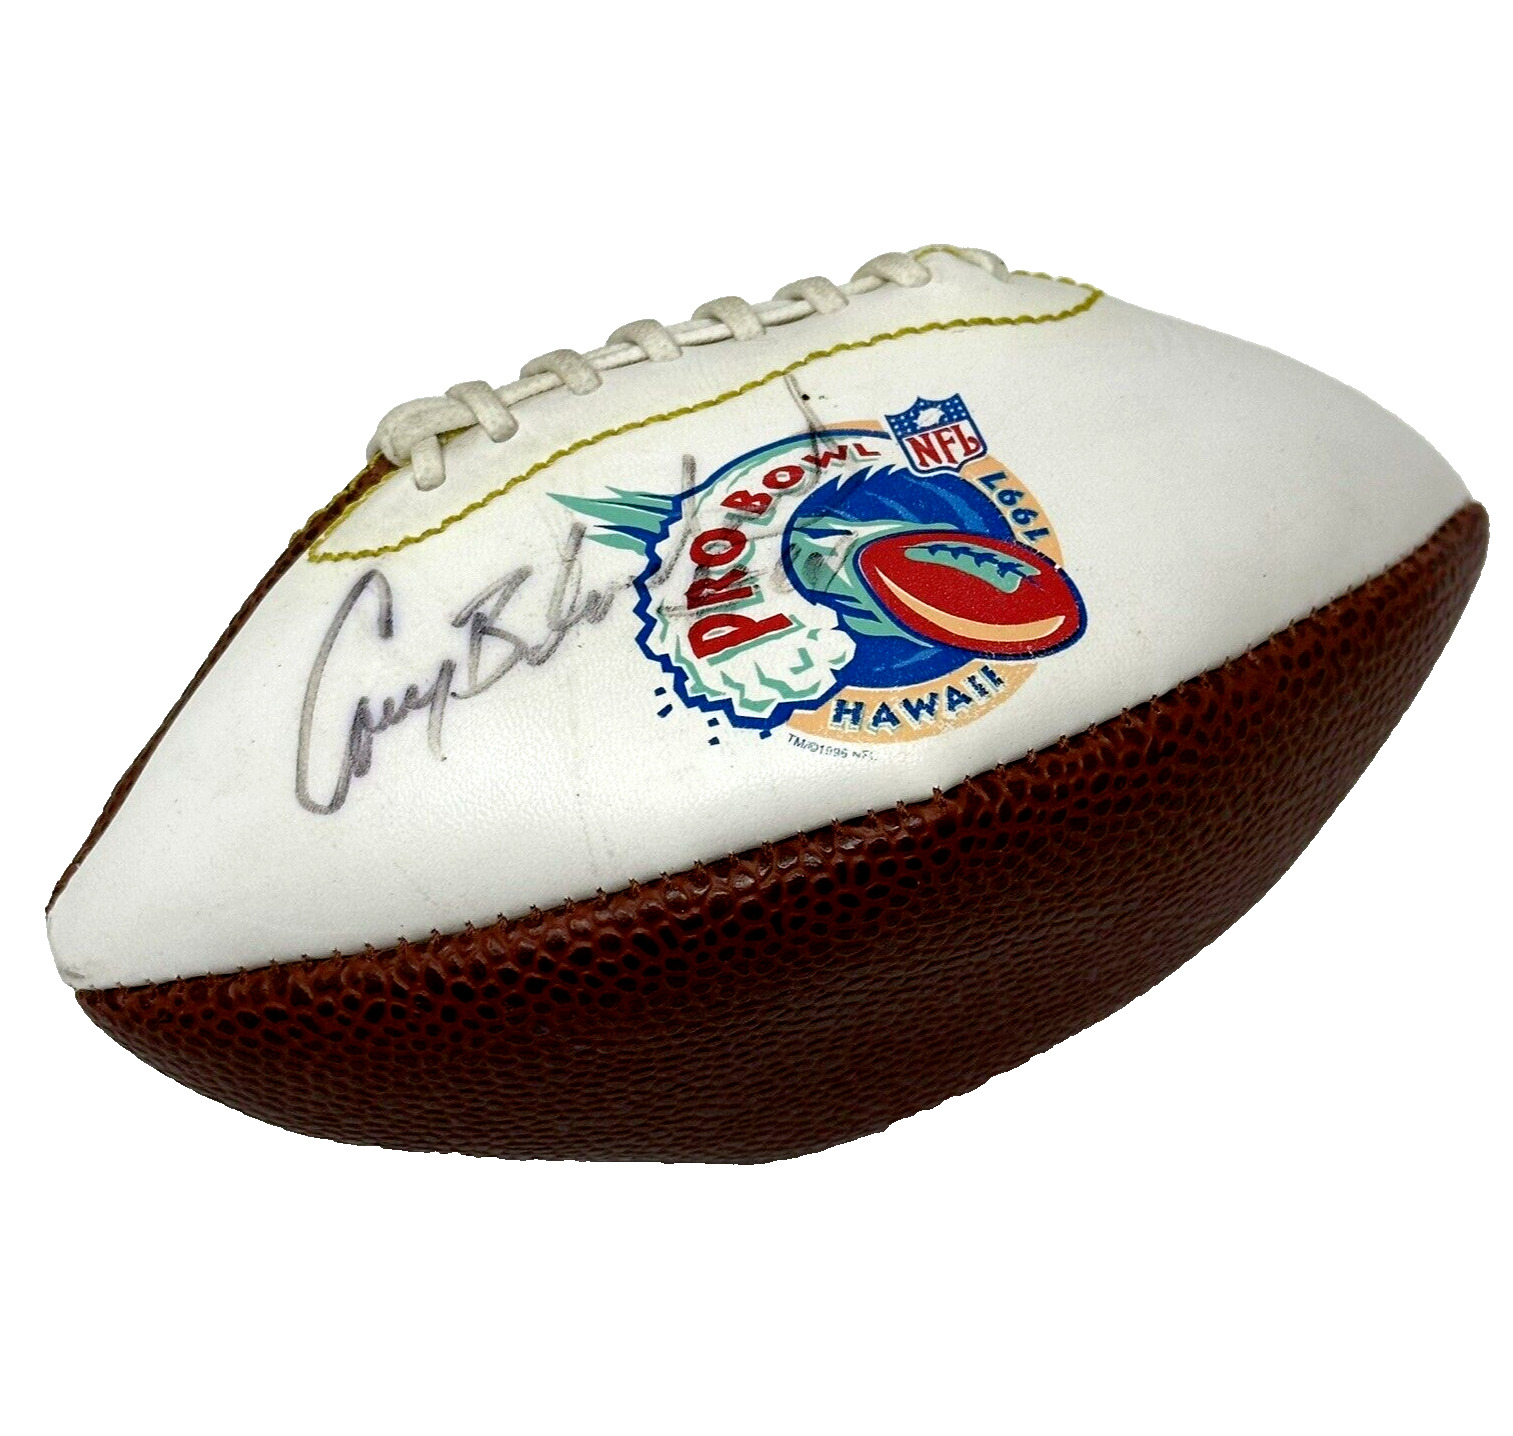 Vintage 1997 NFL Pro Bowl Hawaii Mini Football Signed by Cary Blanchard NO COA